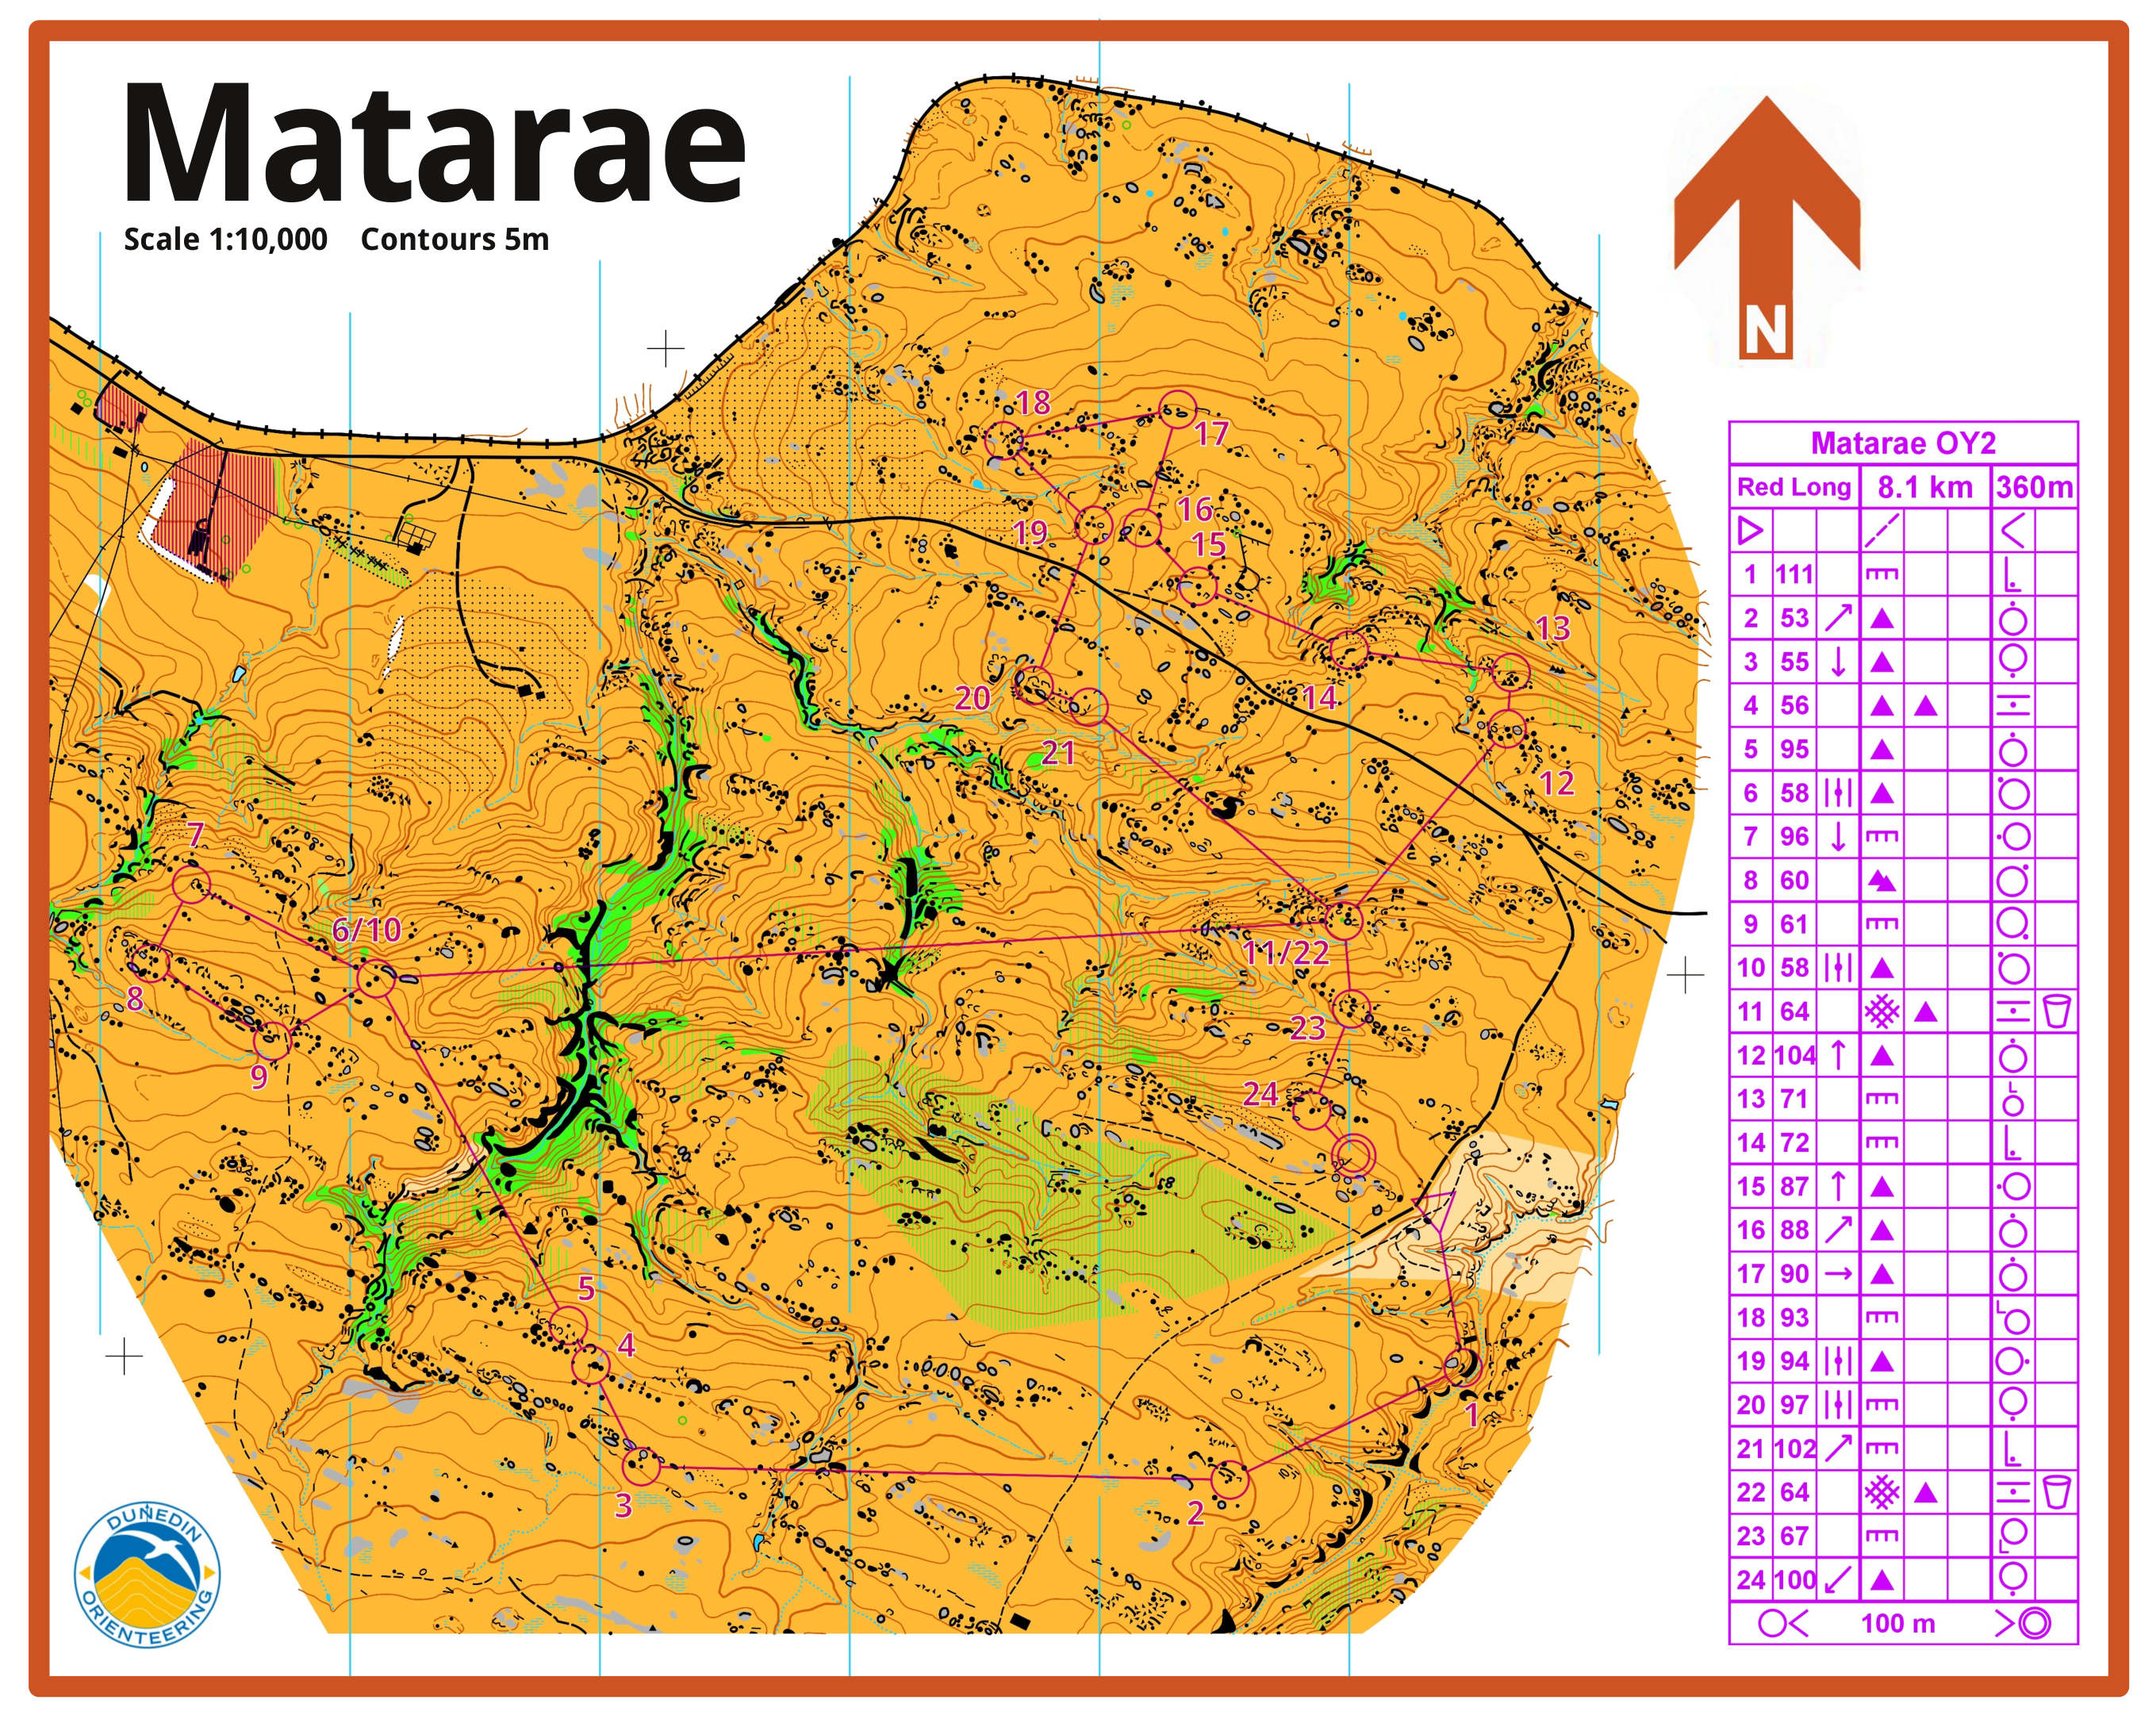 Matarae OY2 (17-05-2015)